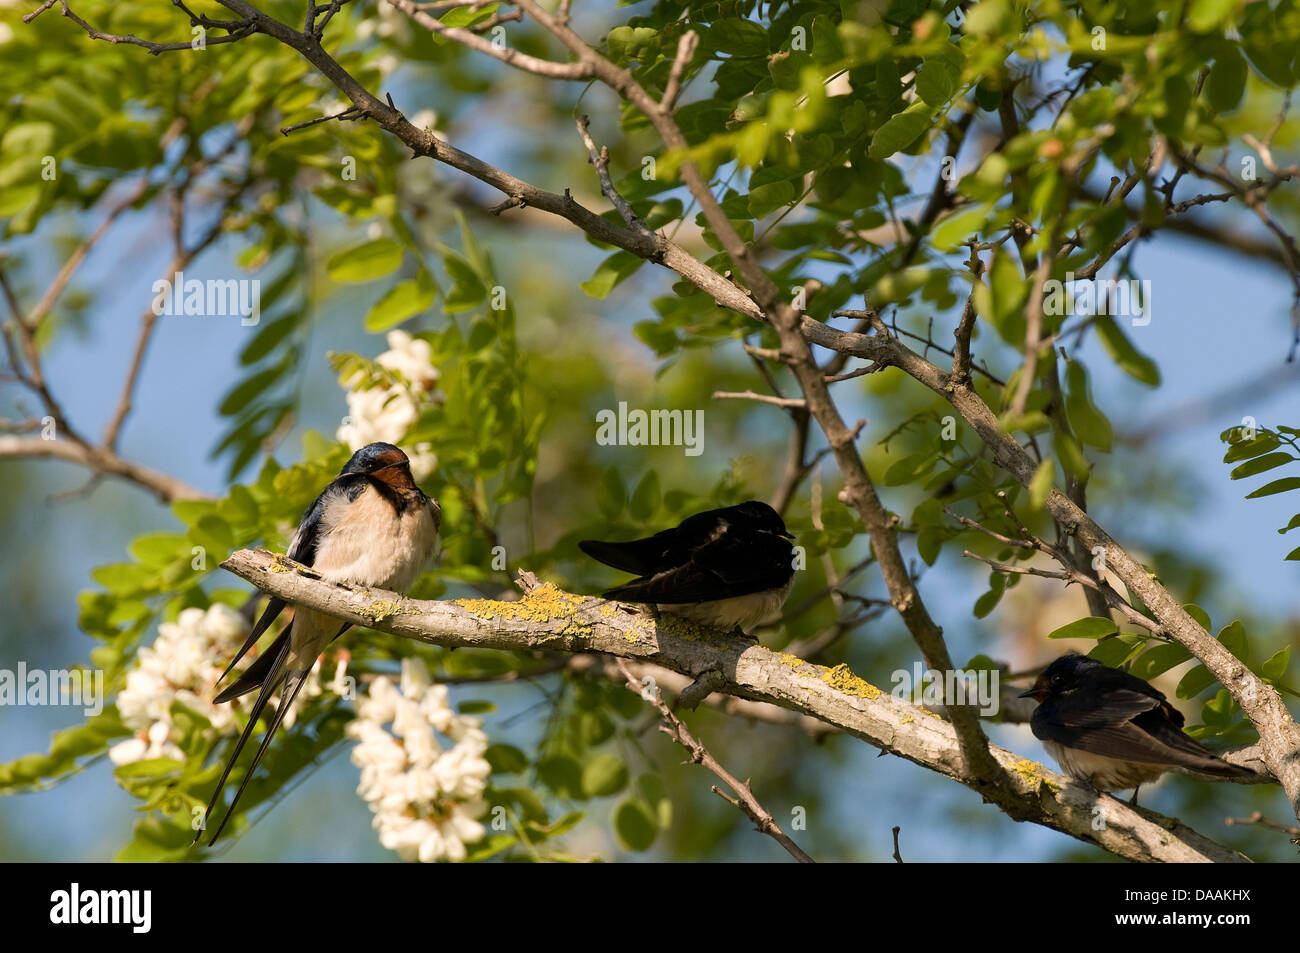 Europe, Bird, branch, Swallow, Hirundo rustica, tree Stock Photo